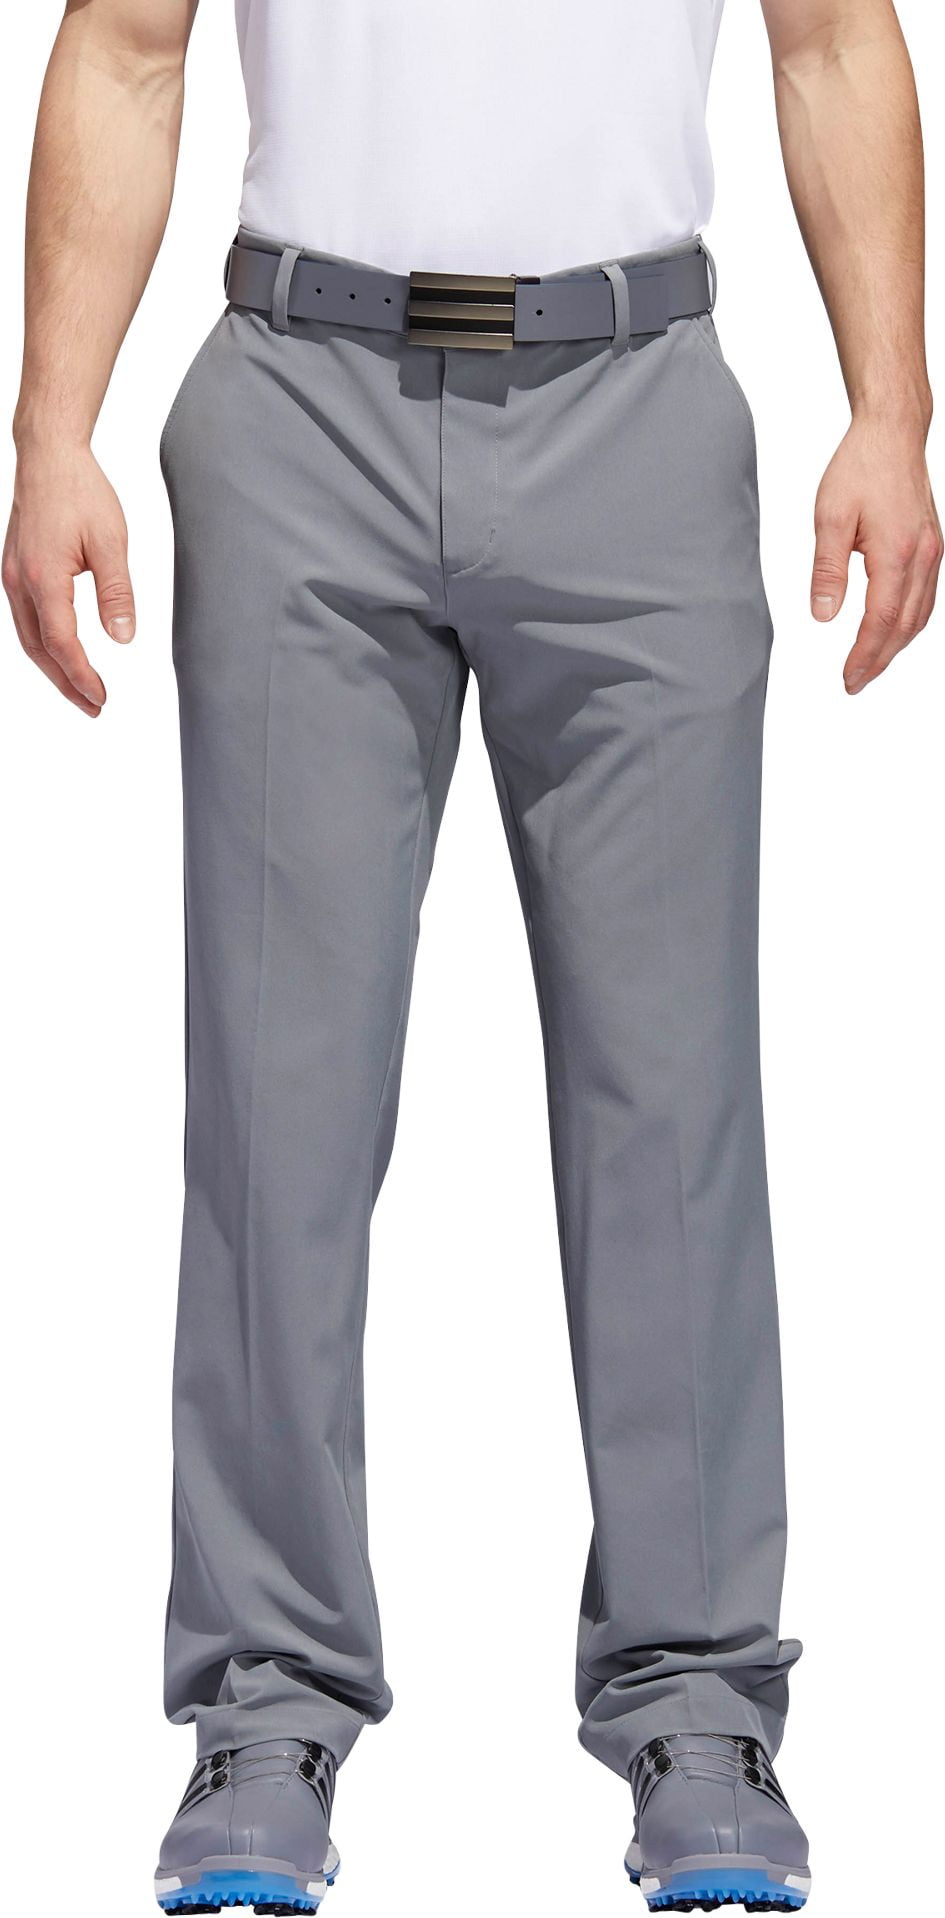 adidas ultimate365 golf pants